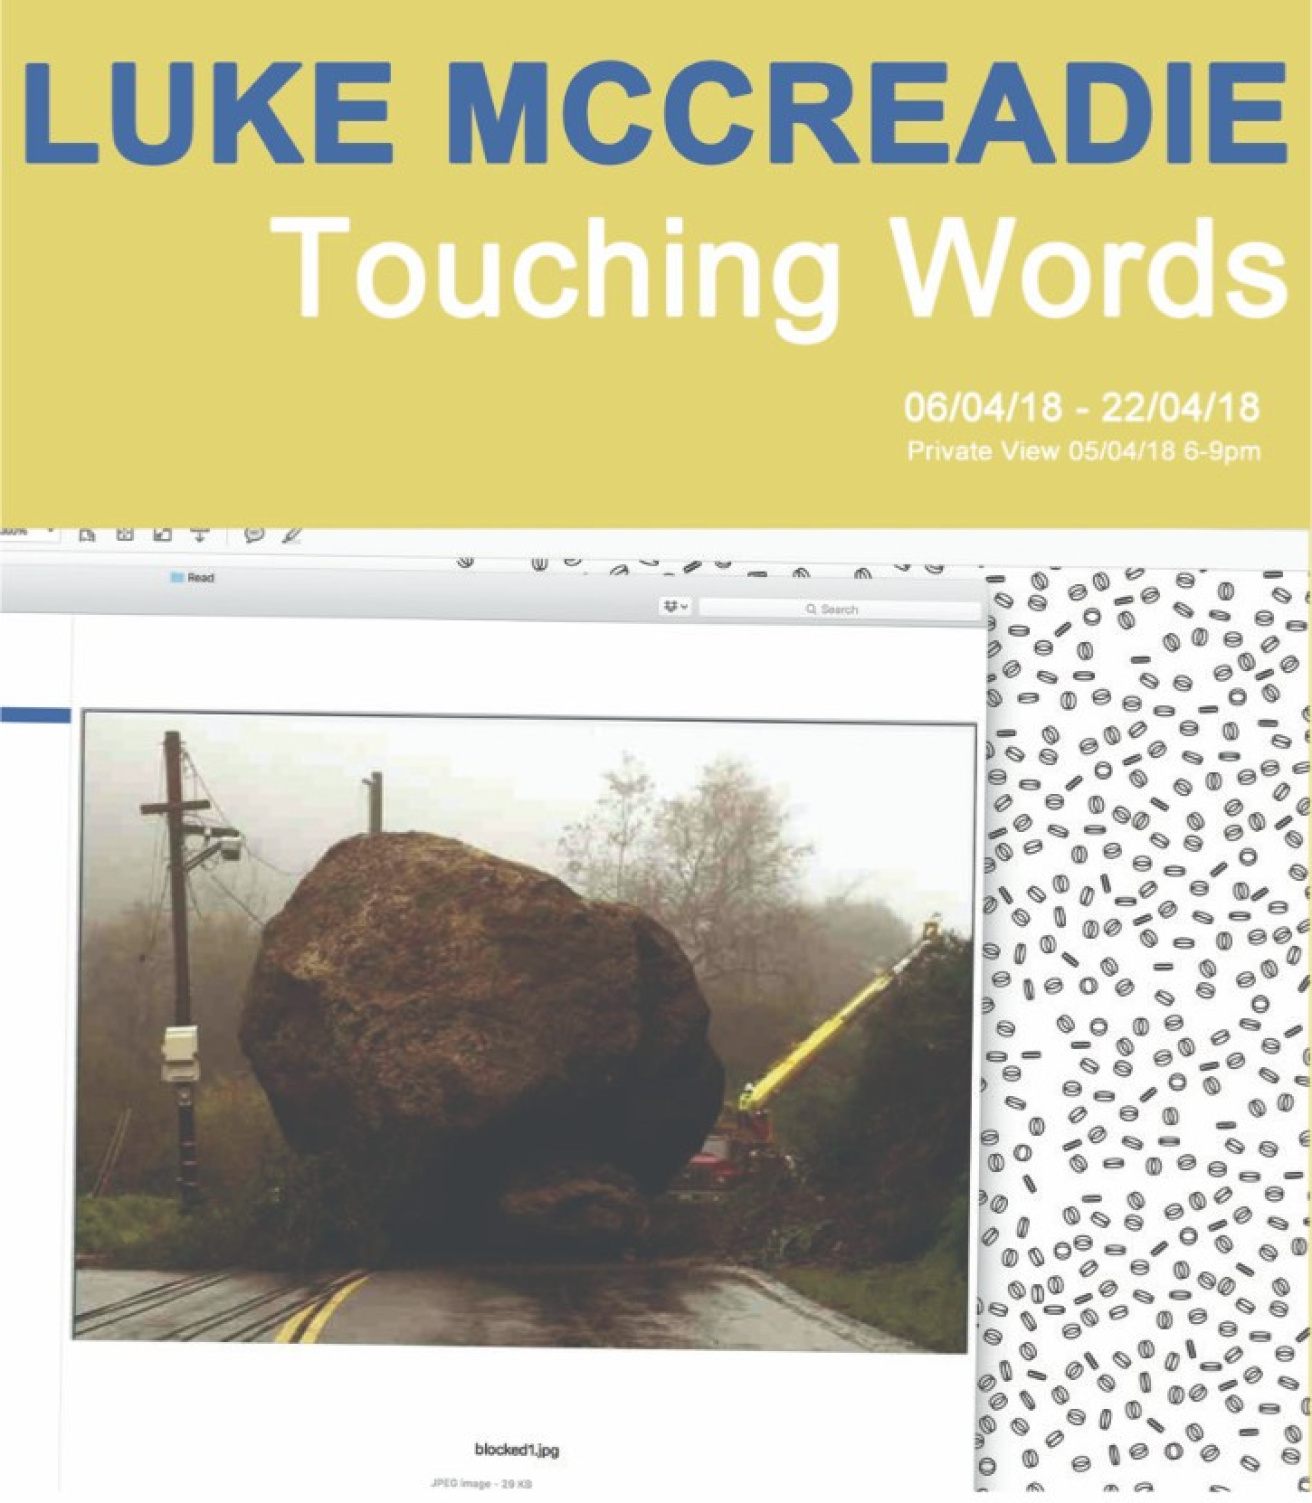 Luke McCreadie - Touching Words Poster